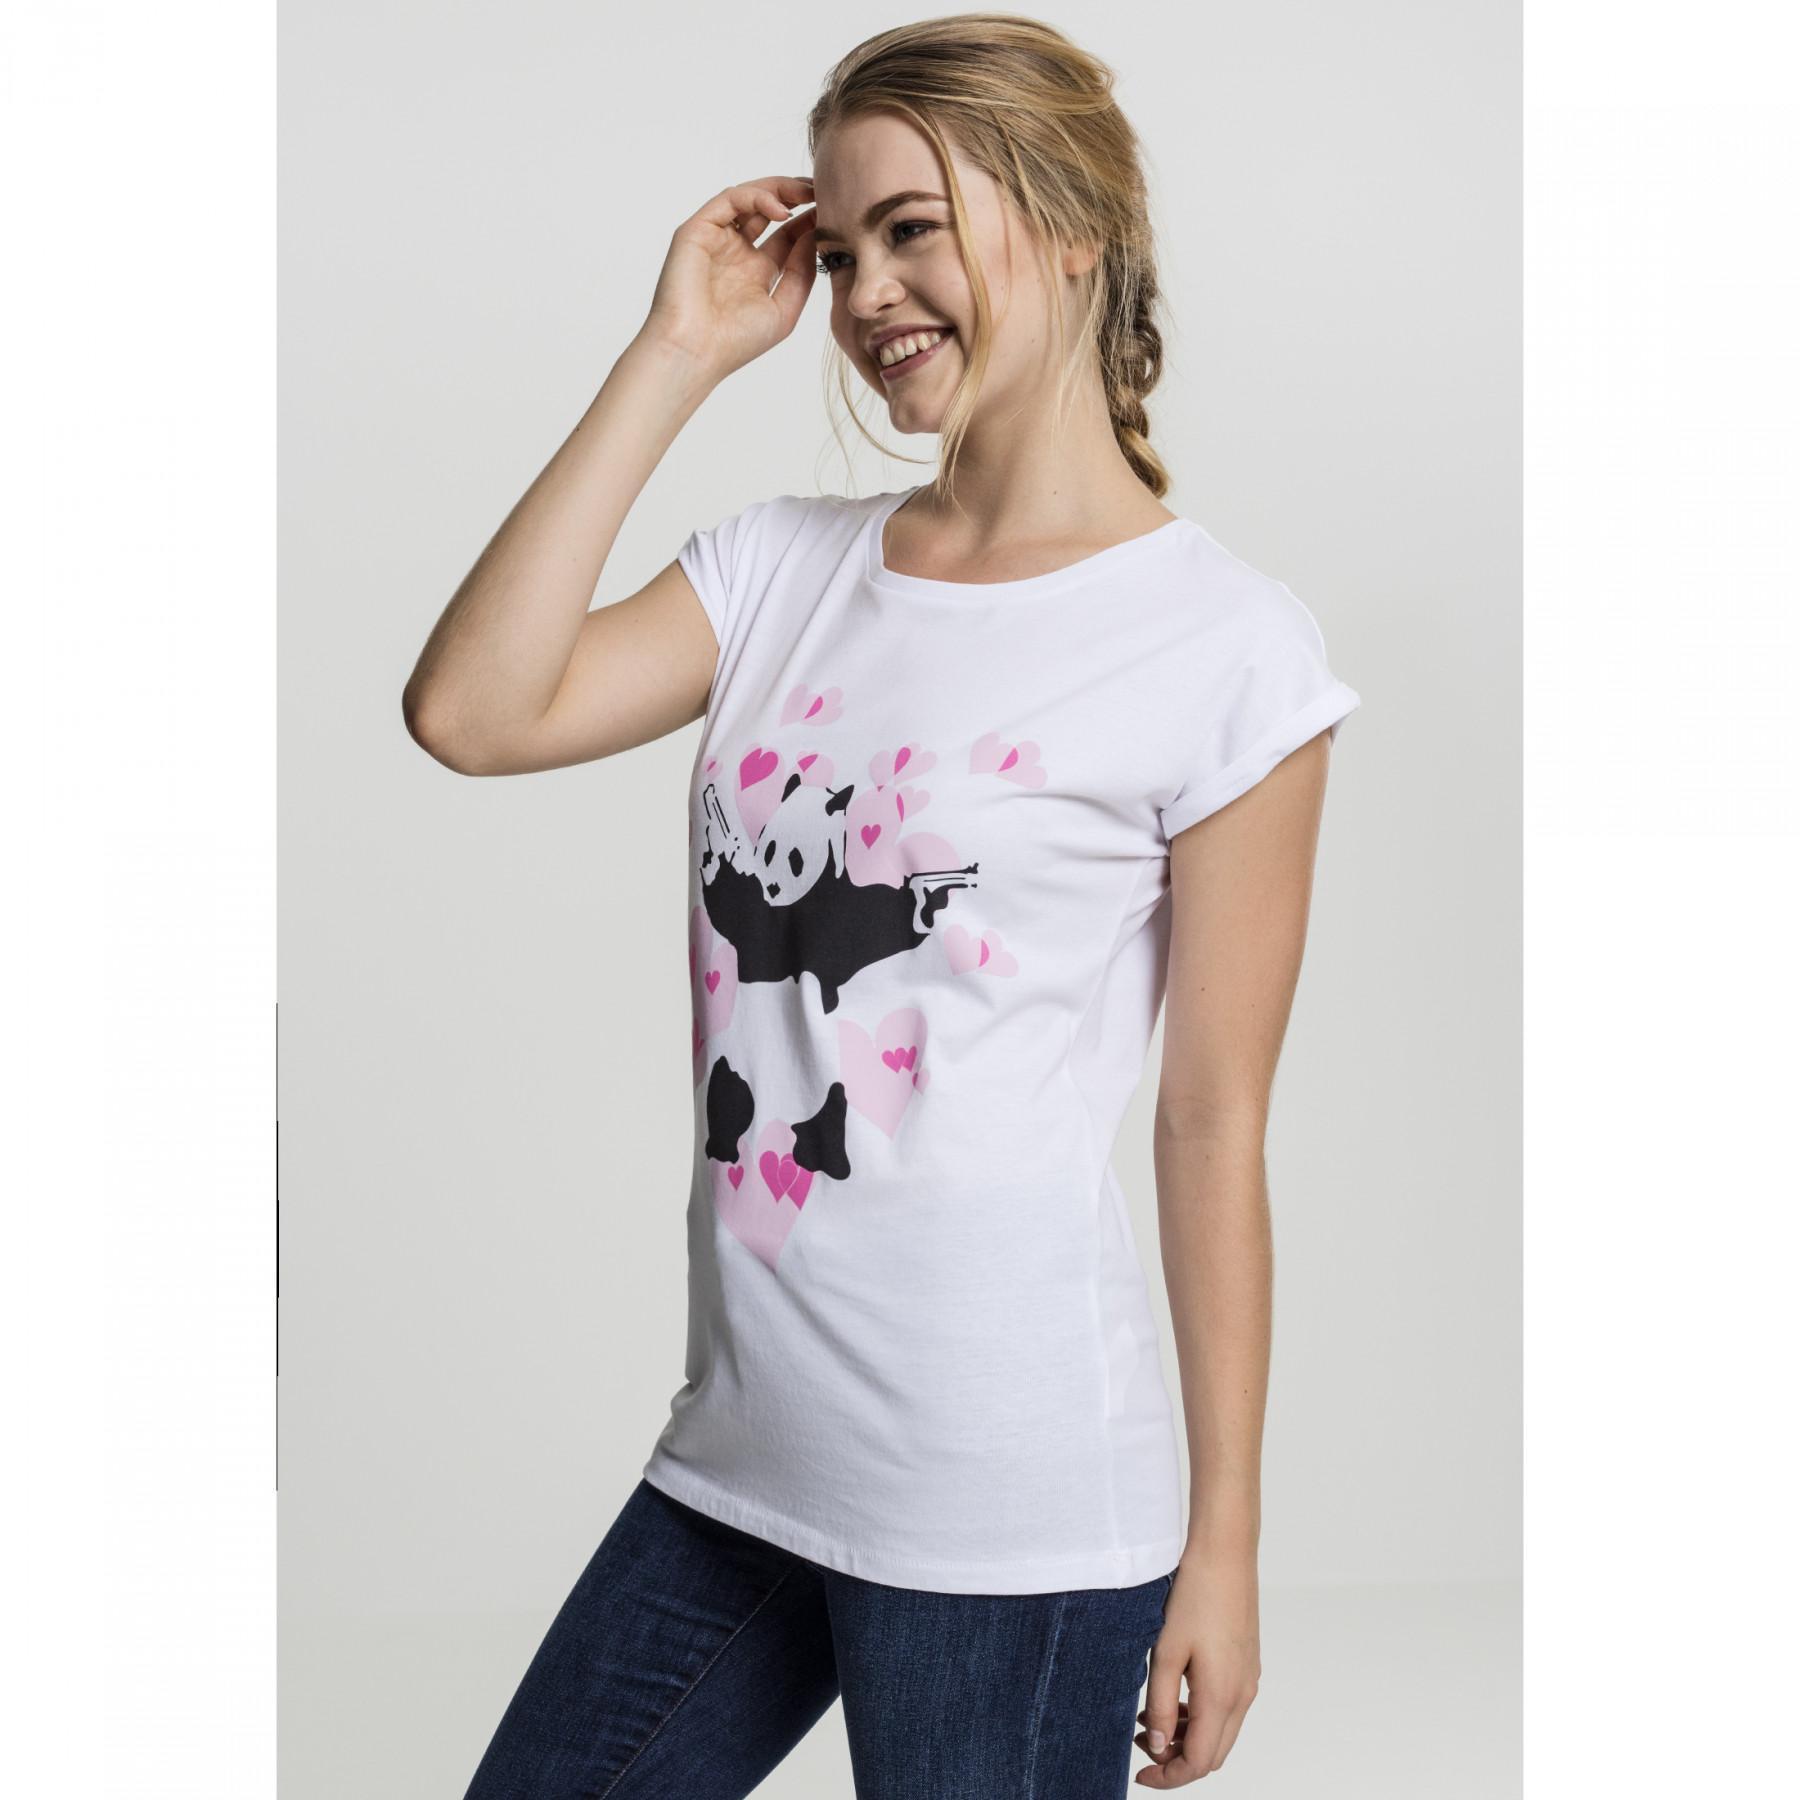 Damski t-shirt miejski classic banky panda heart